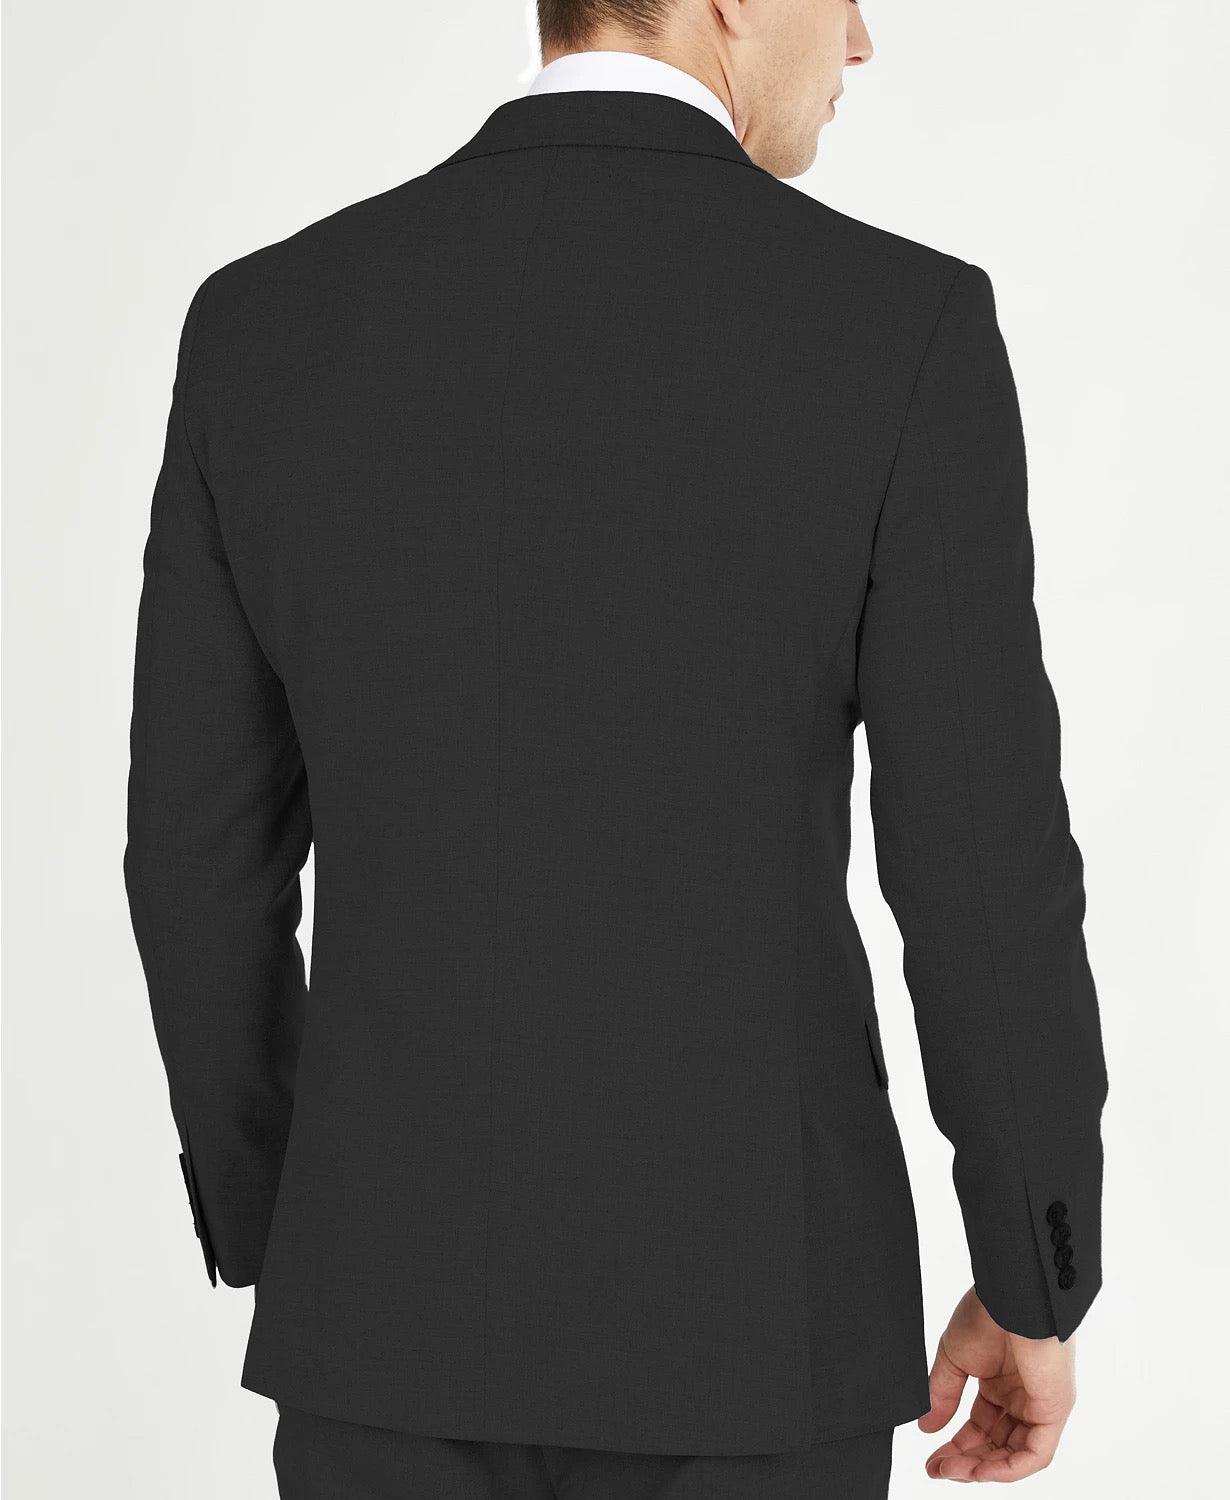 DKNY Men's Suit Jacket Black 42L Modern-Fit Stretch Two Button - Bristol Apparel Co